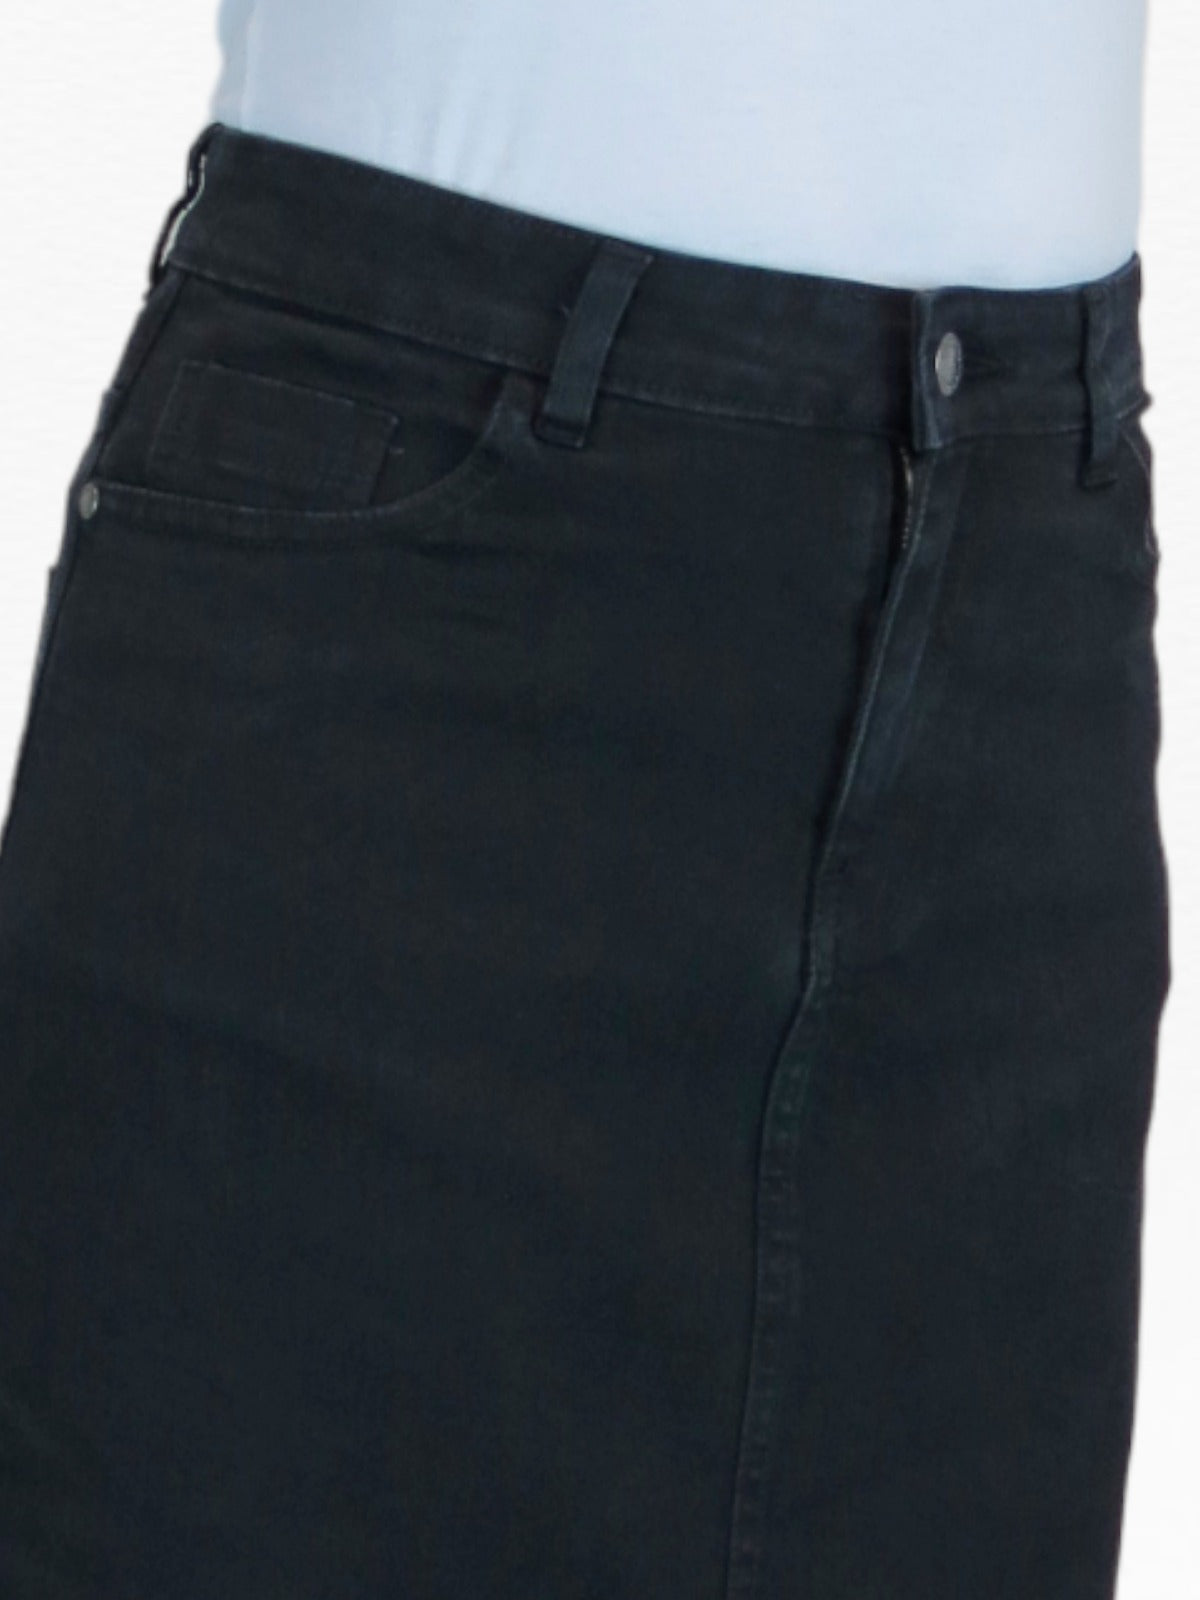 Stretch Denim Jeans Maxi Skirt Black